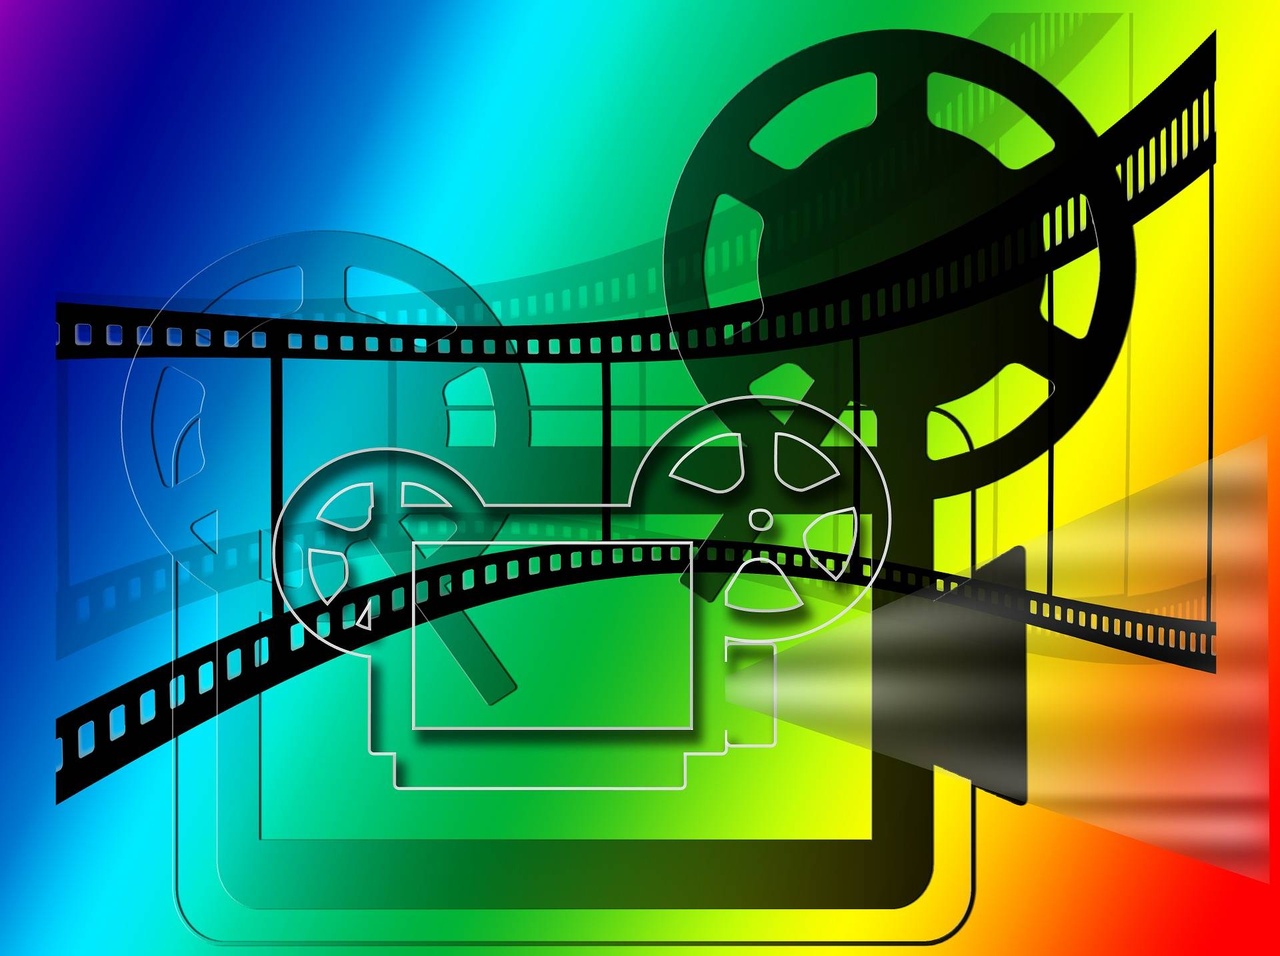 https://pixabay.com/en/film-projector-movie-projector-596519/